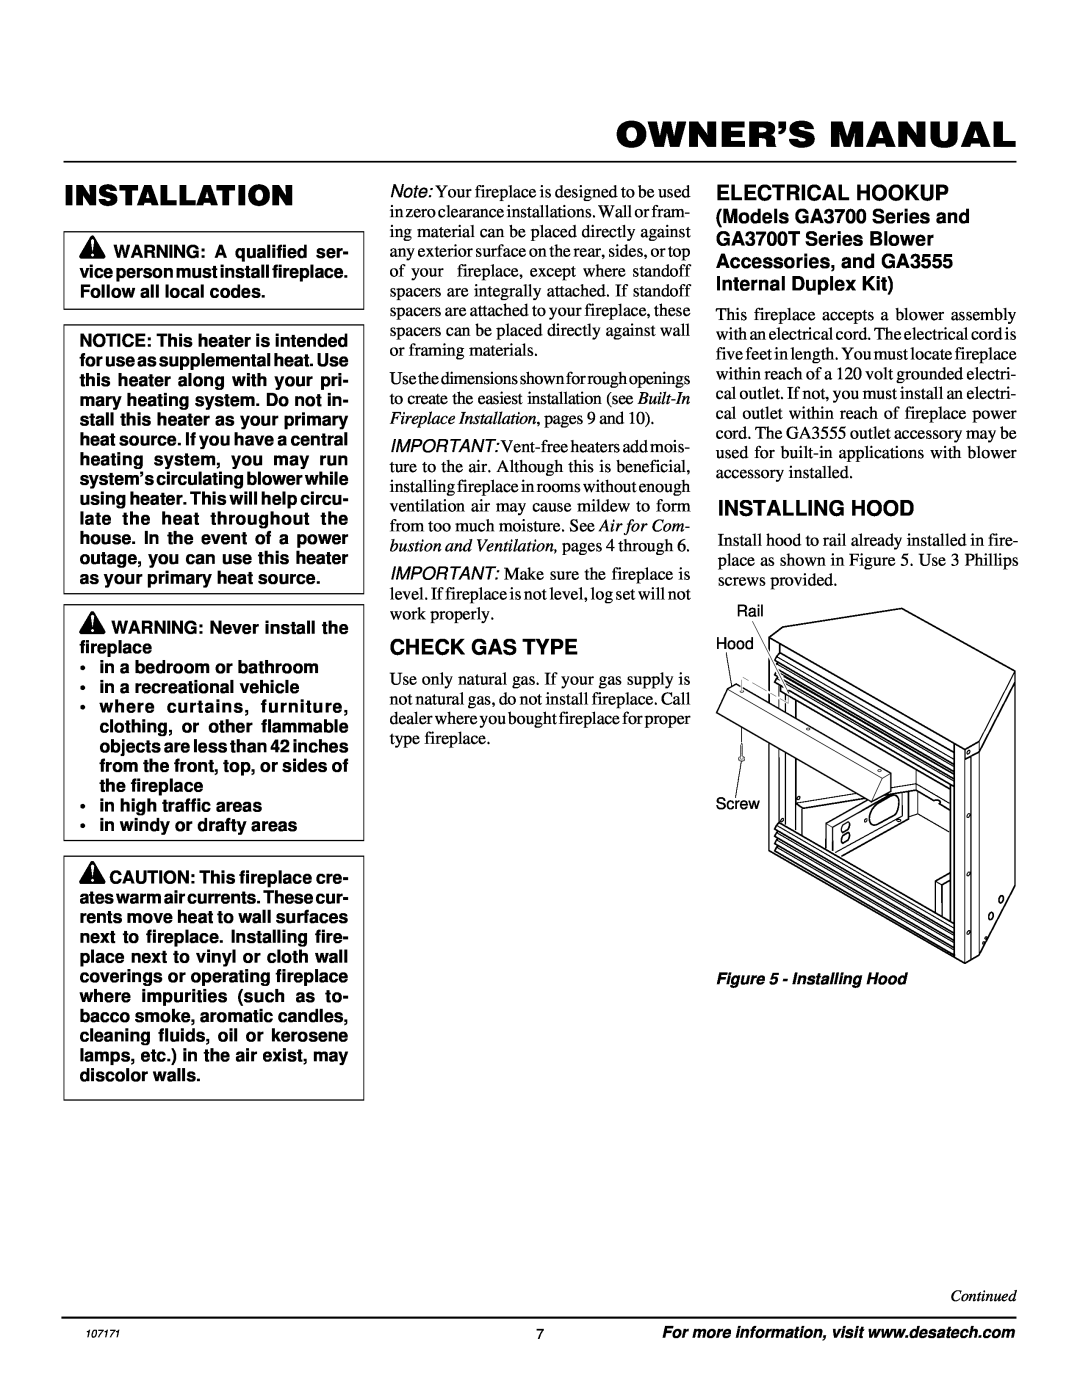 Desa VSGF33NR installation manual Installation, Check Gas Type, Electrical Hookup, Installing Hood 